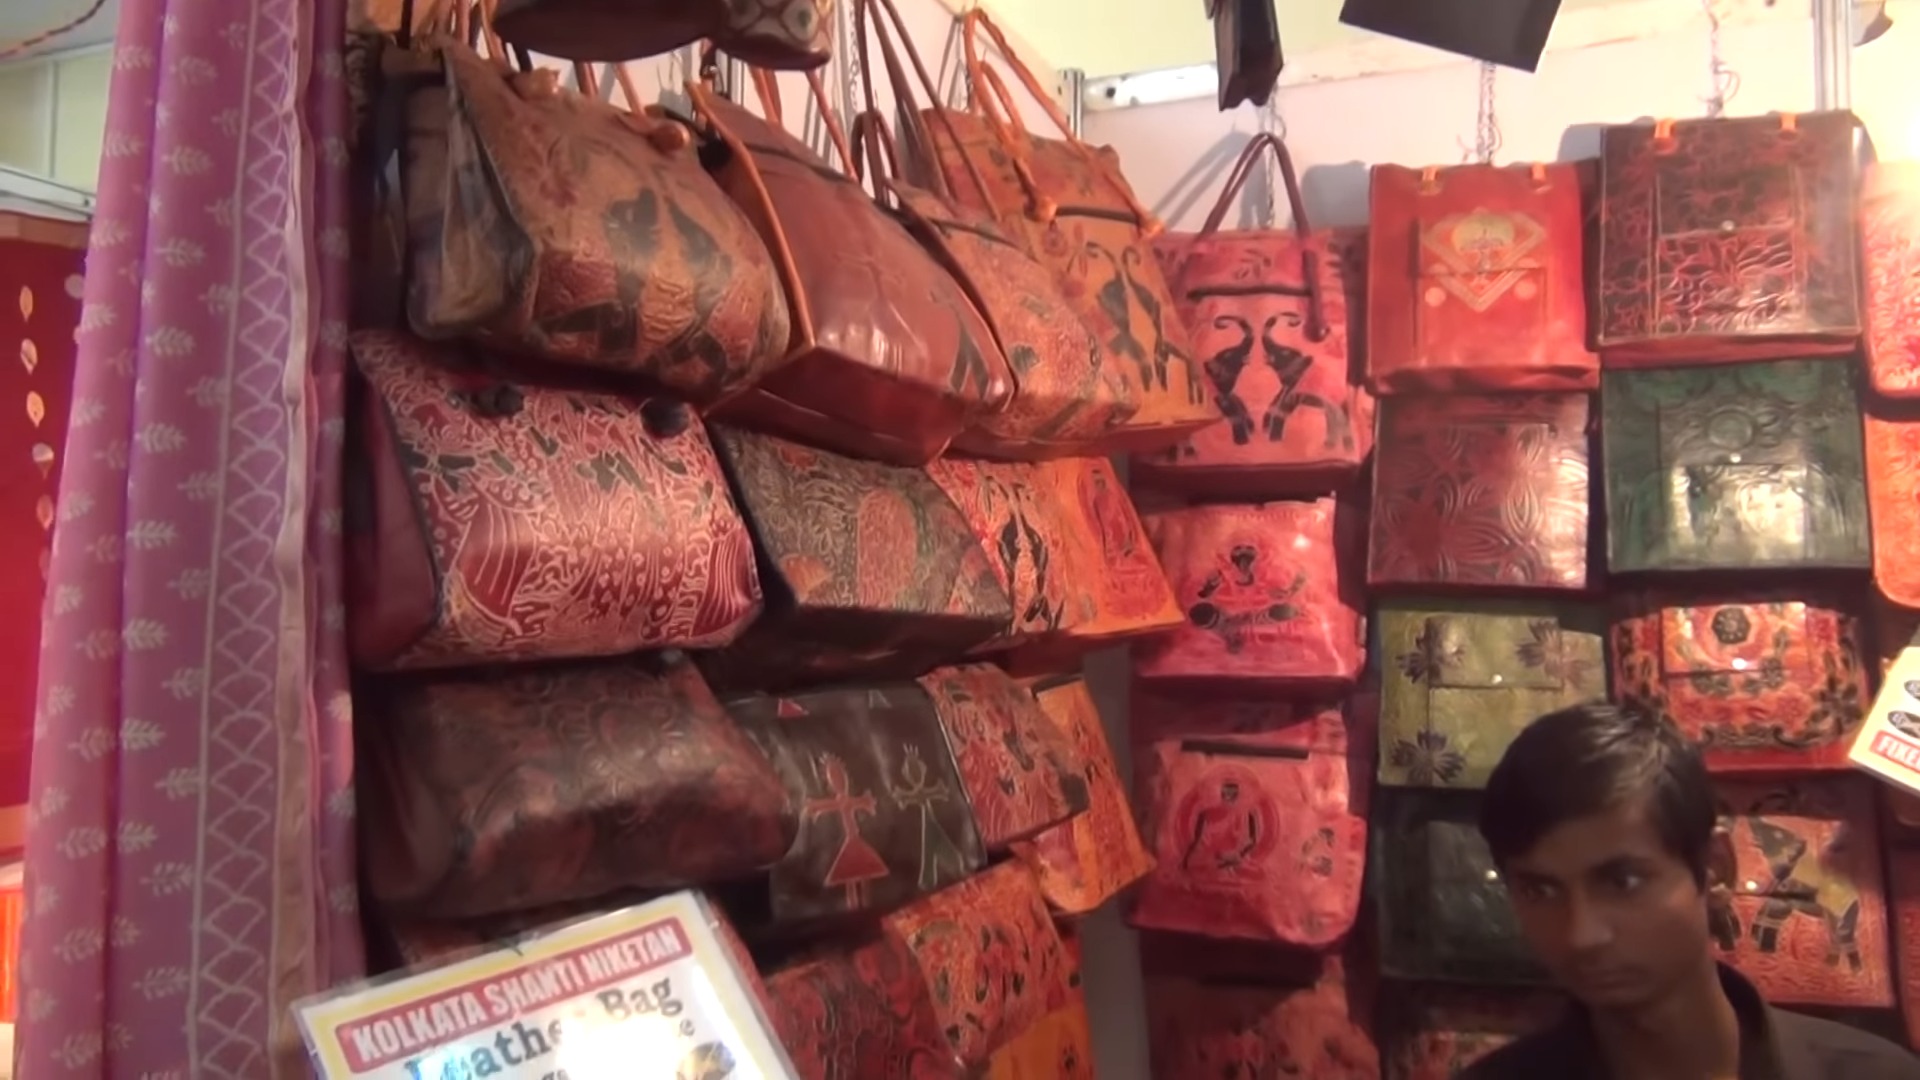 SilkyKraftz Handcrafted Genuine Shantiniketan Leather Clutch Bag Purse for  Girls – SaumyasStore